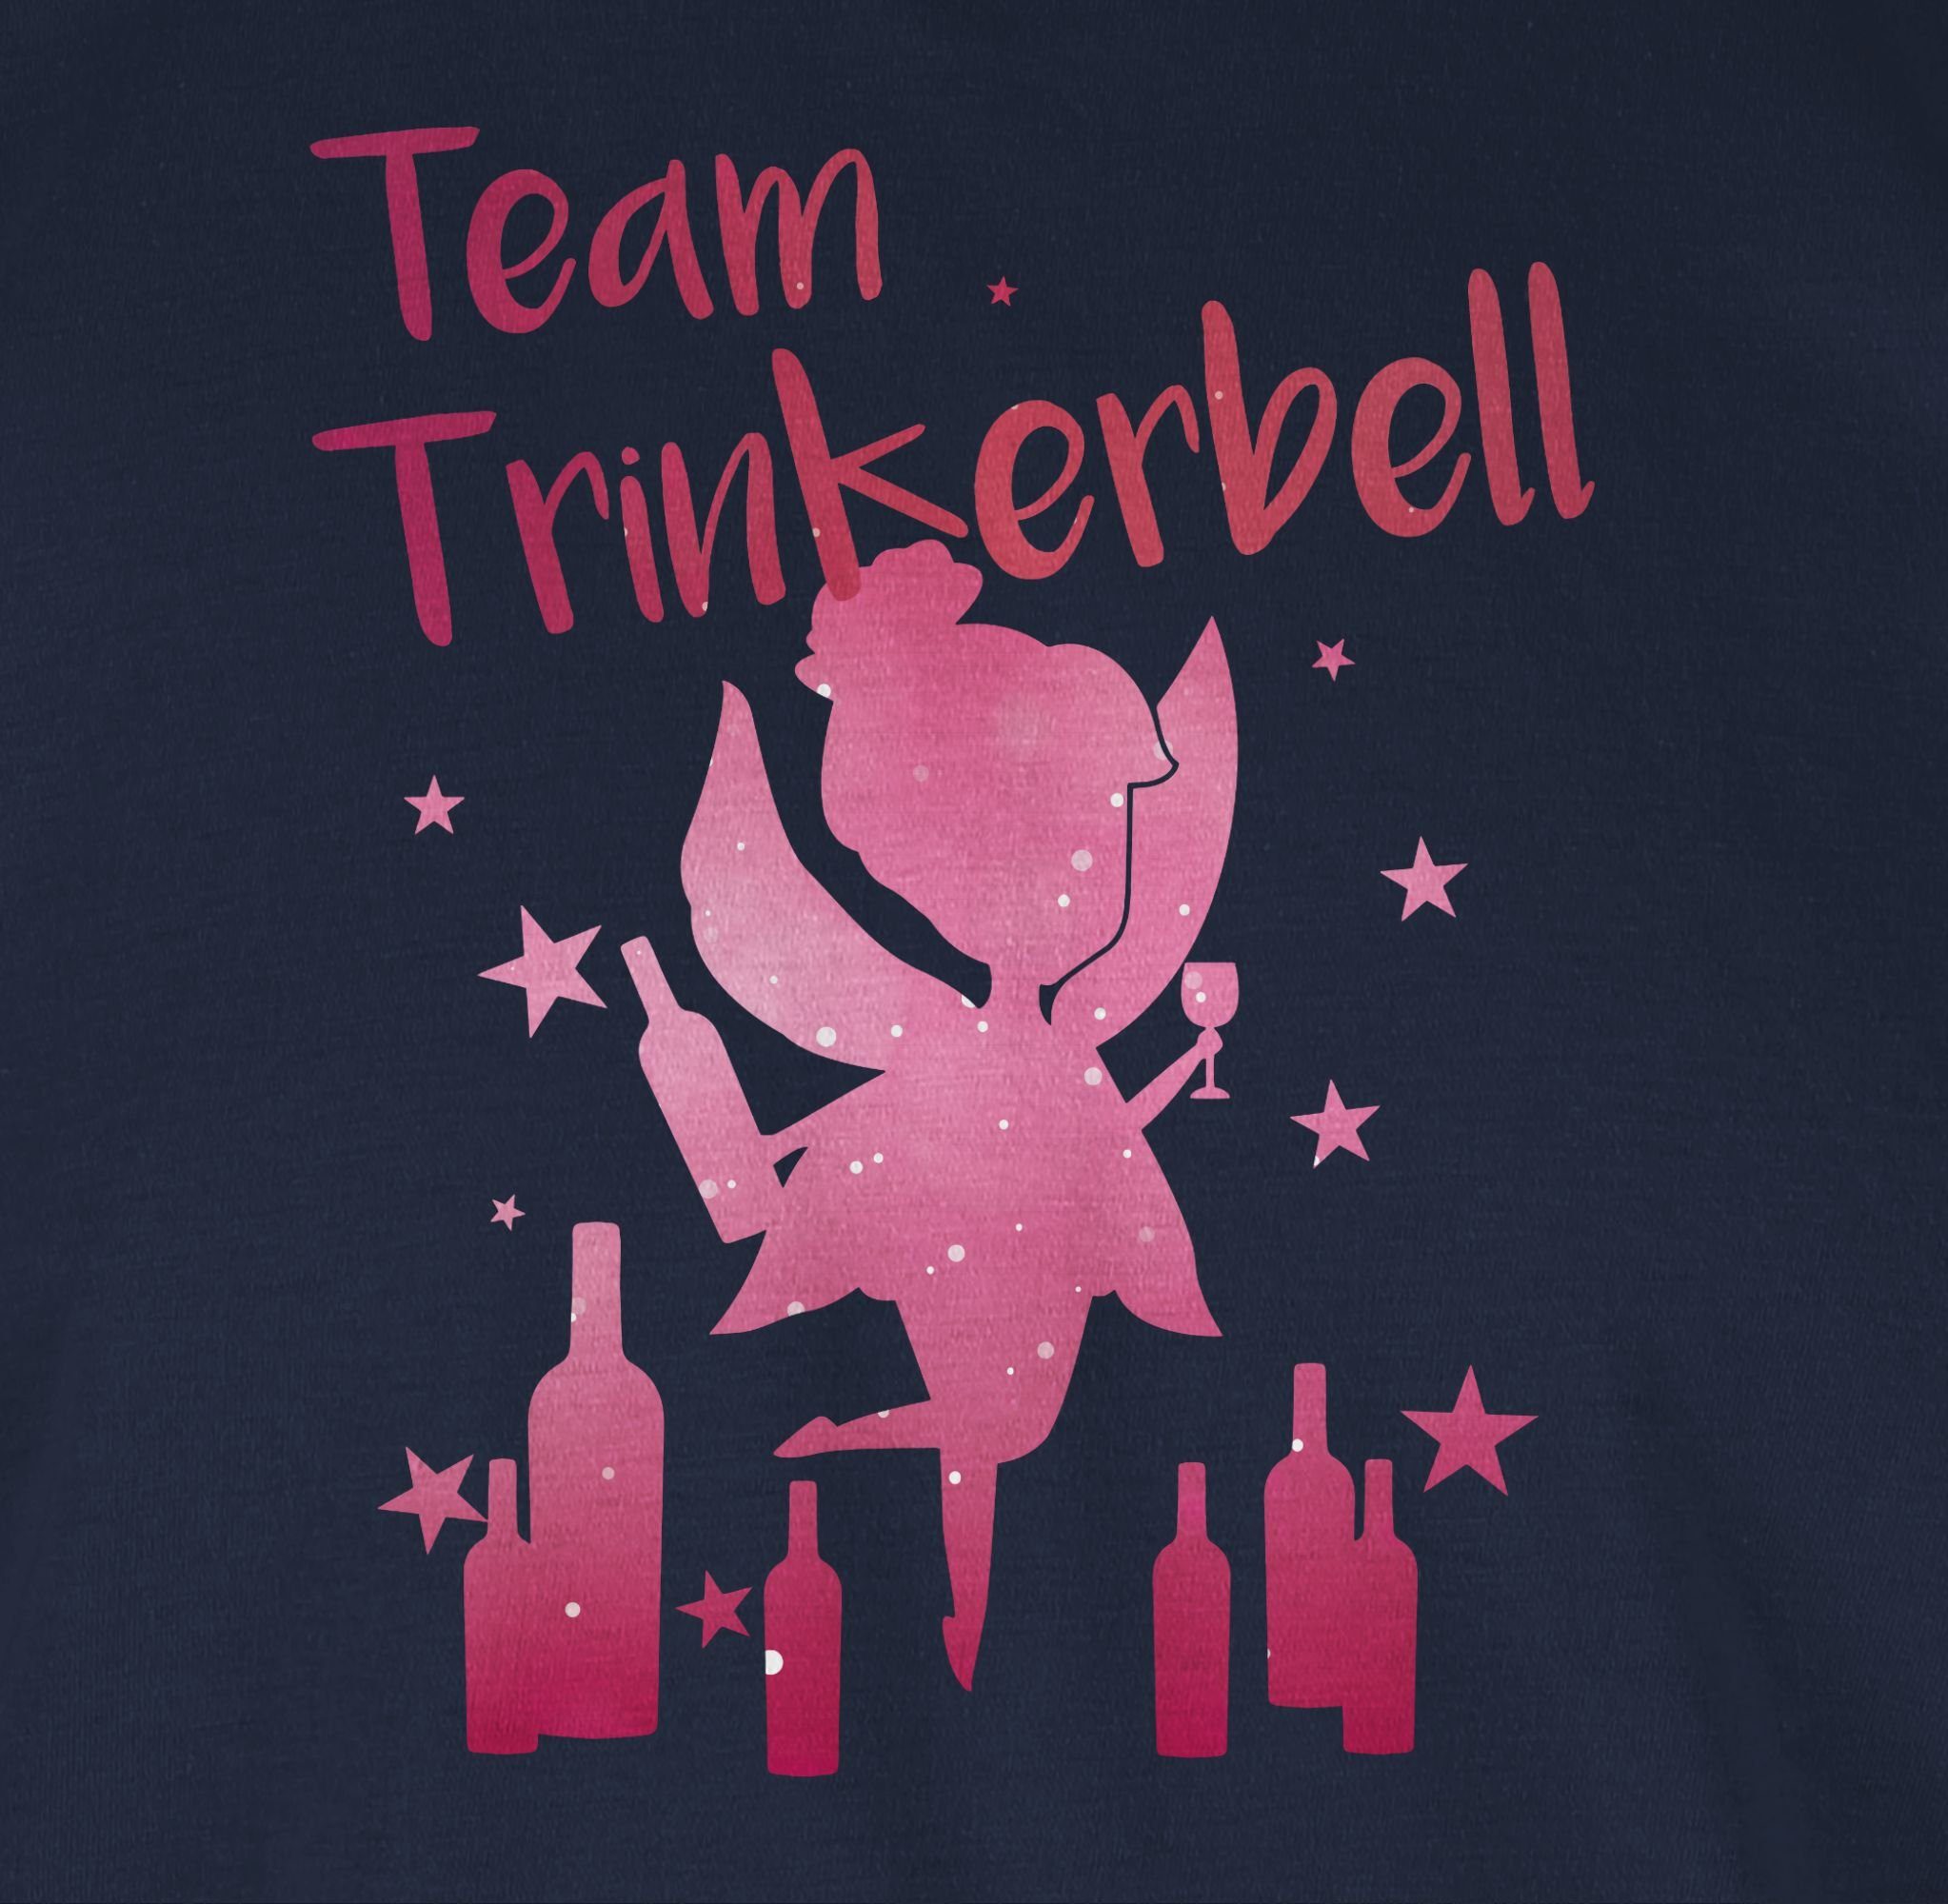 Karneval Blau Trinkerbell Navy T-Shirt 02 Team Outfit Shirtracer